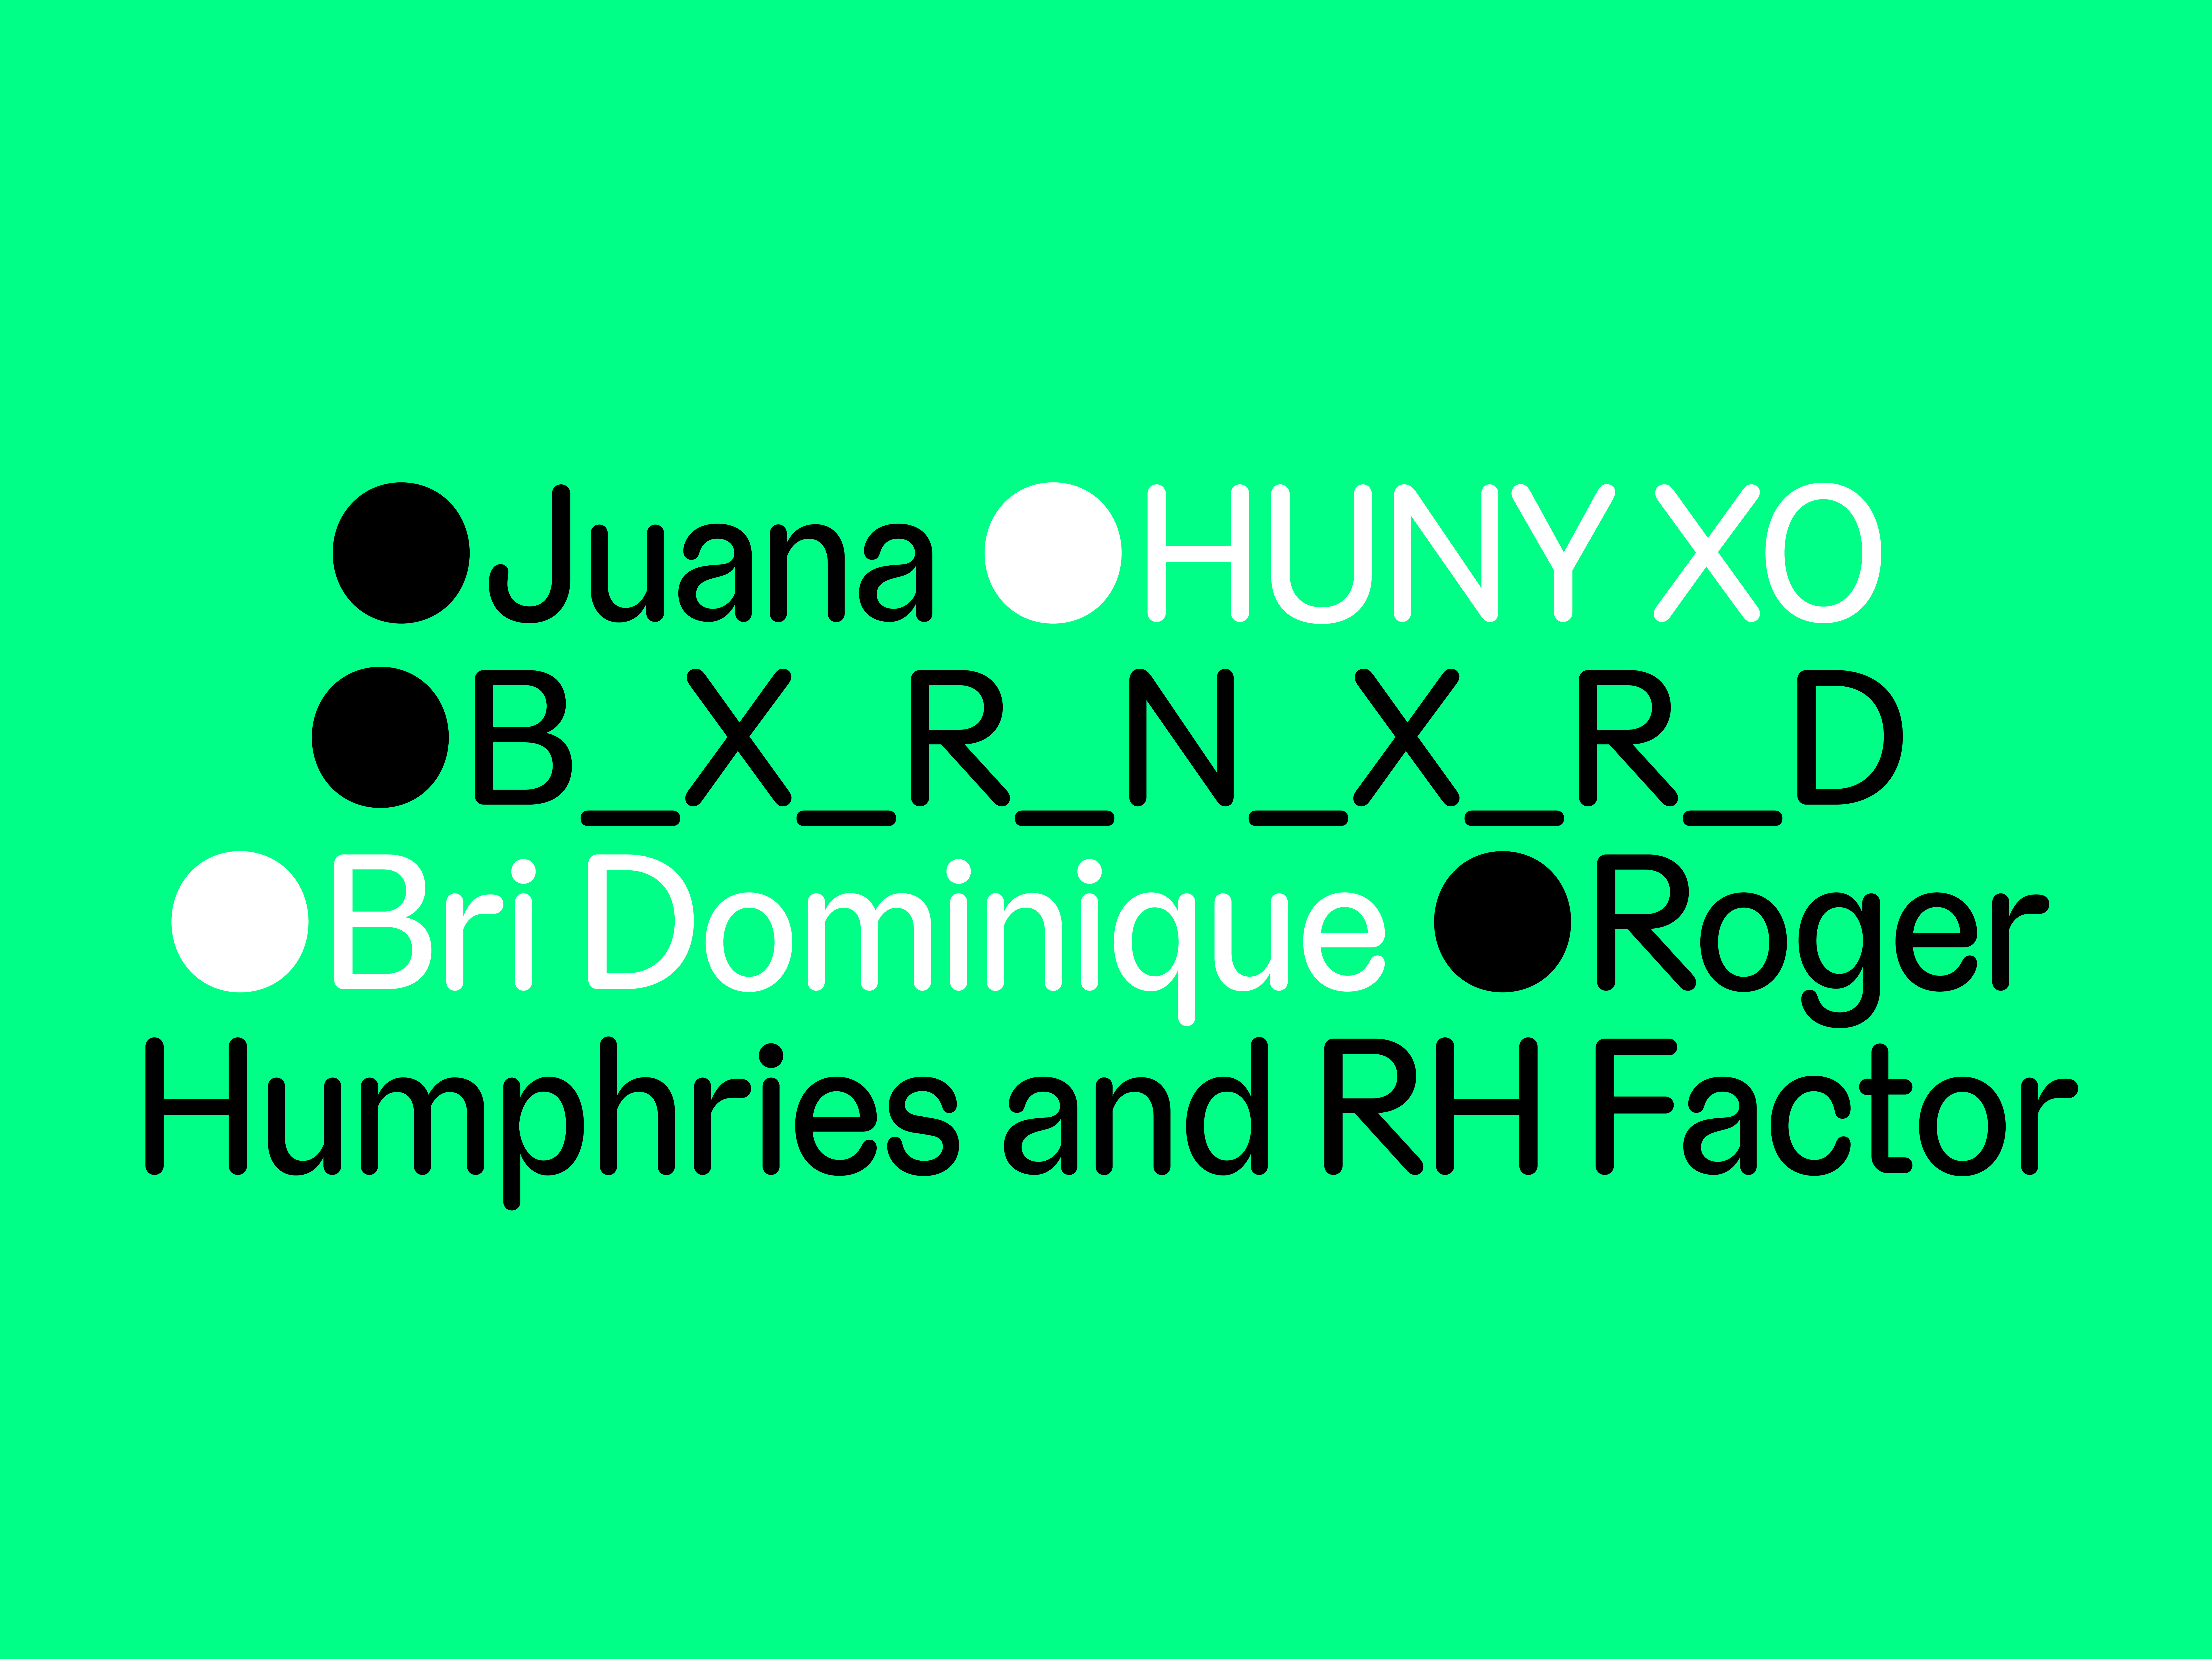 Roger Humphries and RH Factor, Brie Dominique, B_X_R_N_X_R_D, Juana, HUNY XO